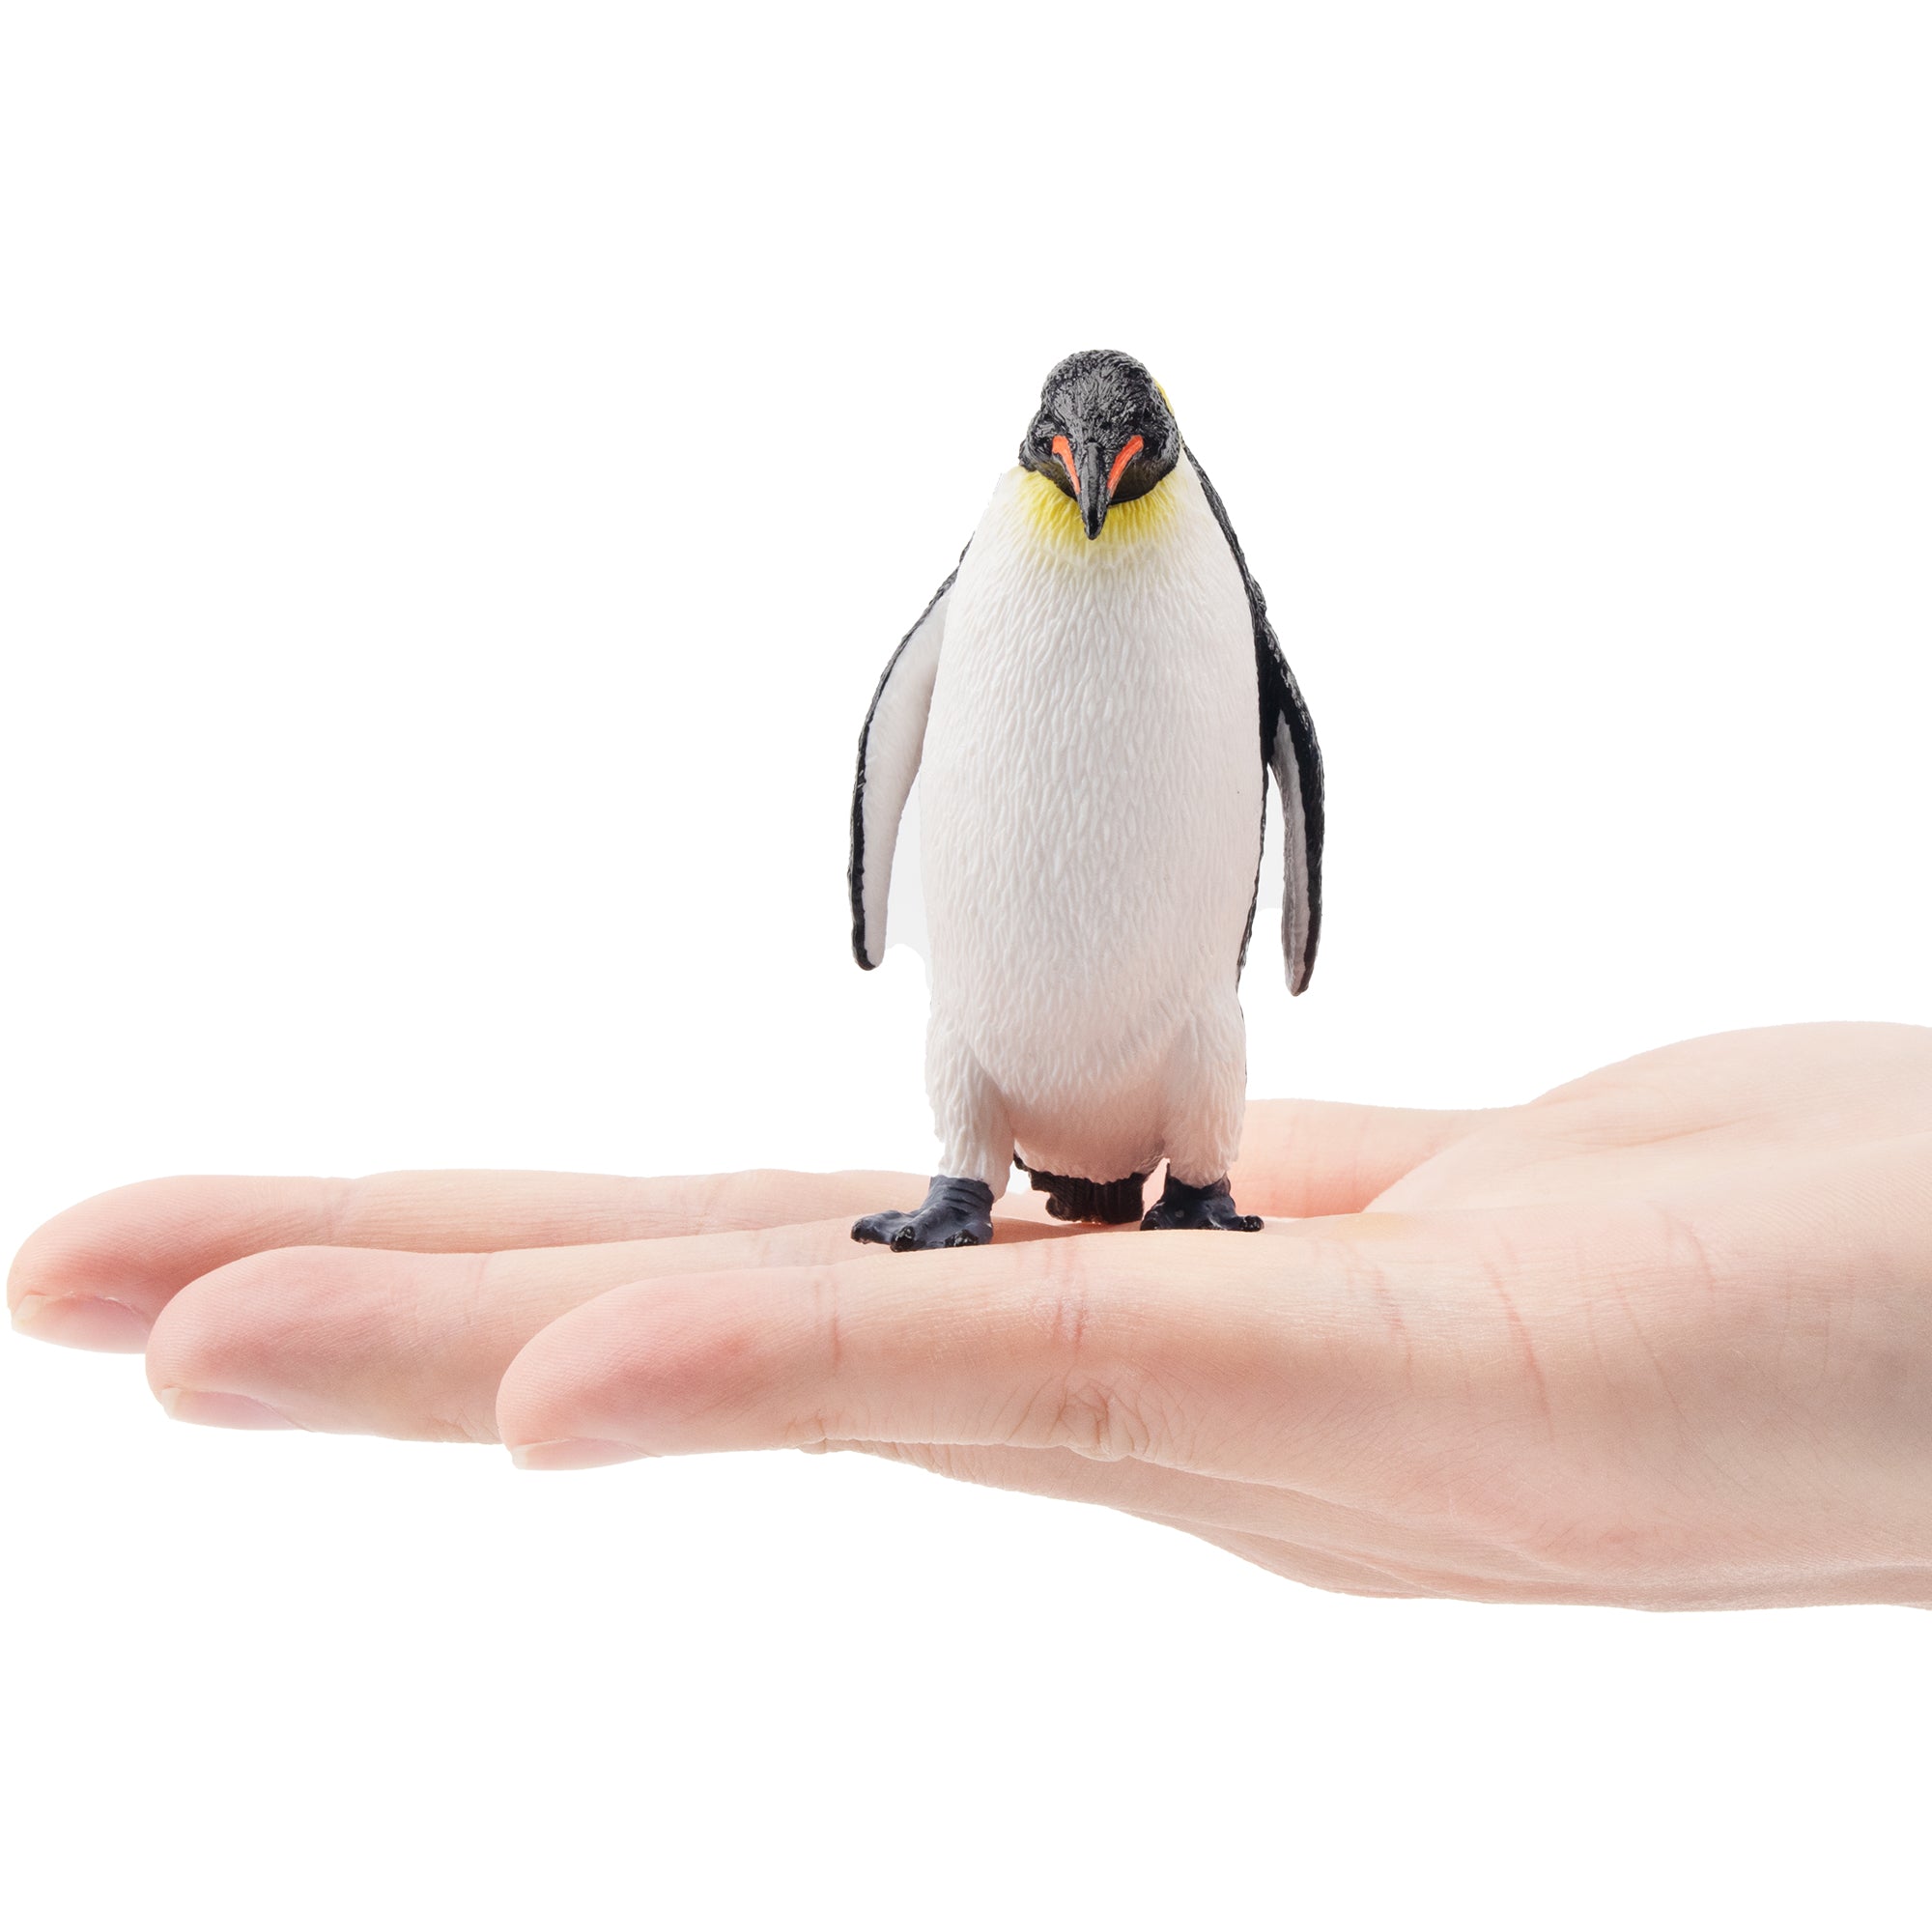 Toymany Emperor Penguin Figurine Toy-on hand